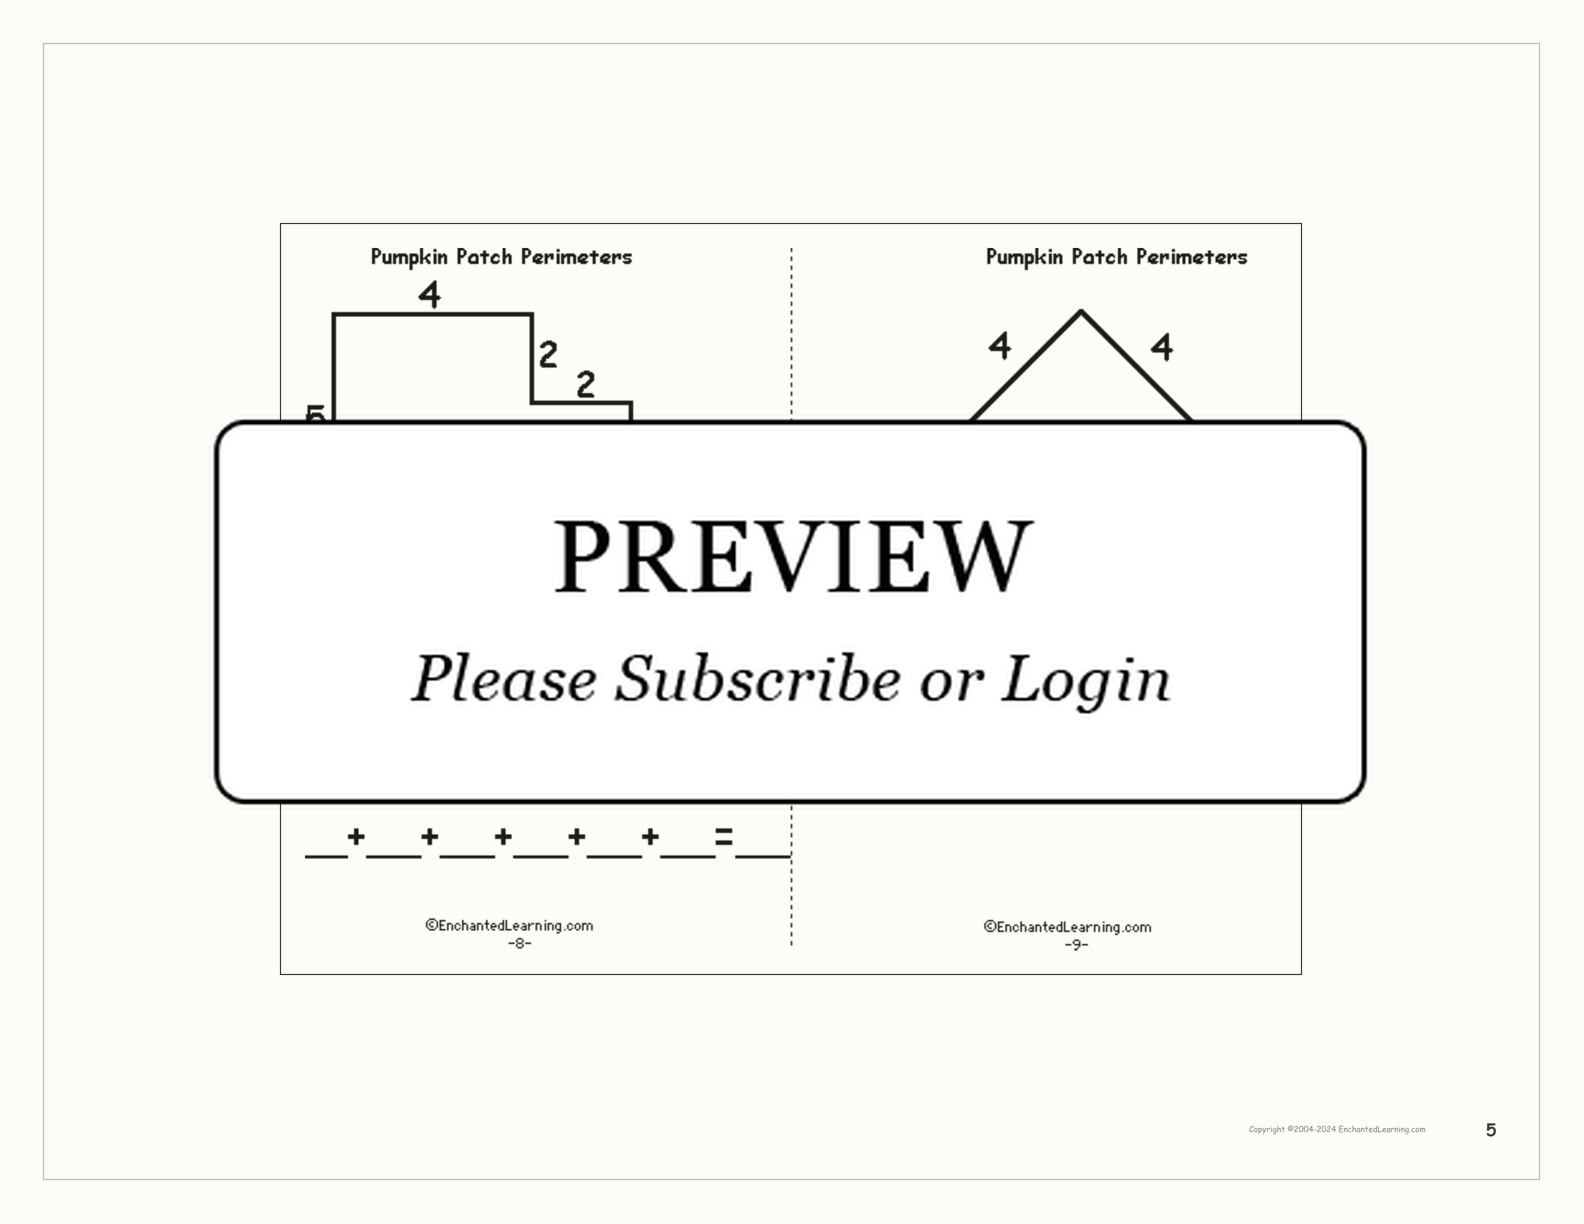 Pumpkin Patch Perimeters: A Printable Book interactive printout page 5